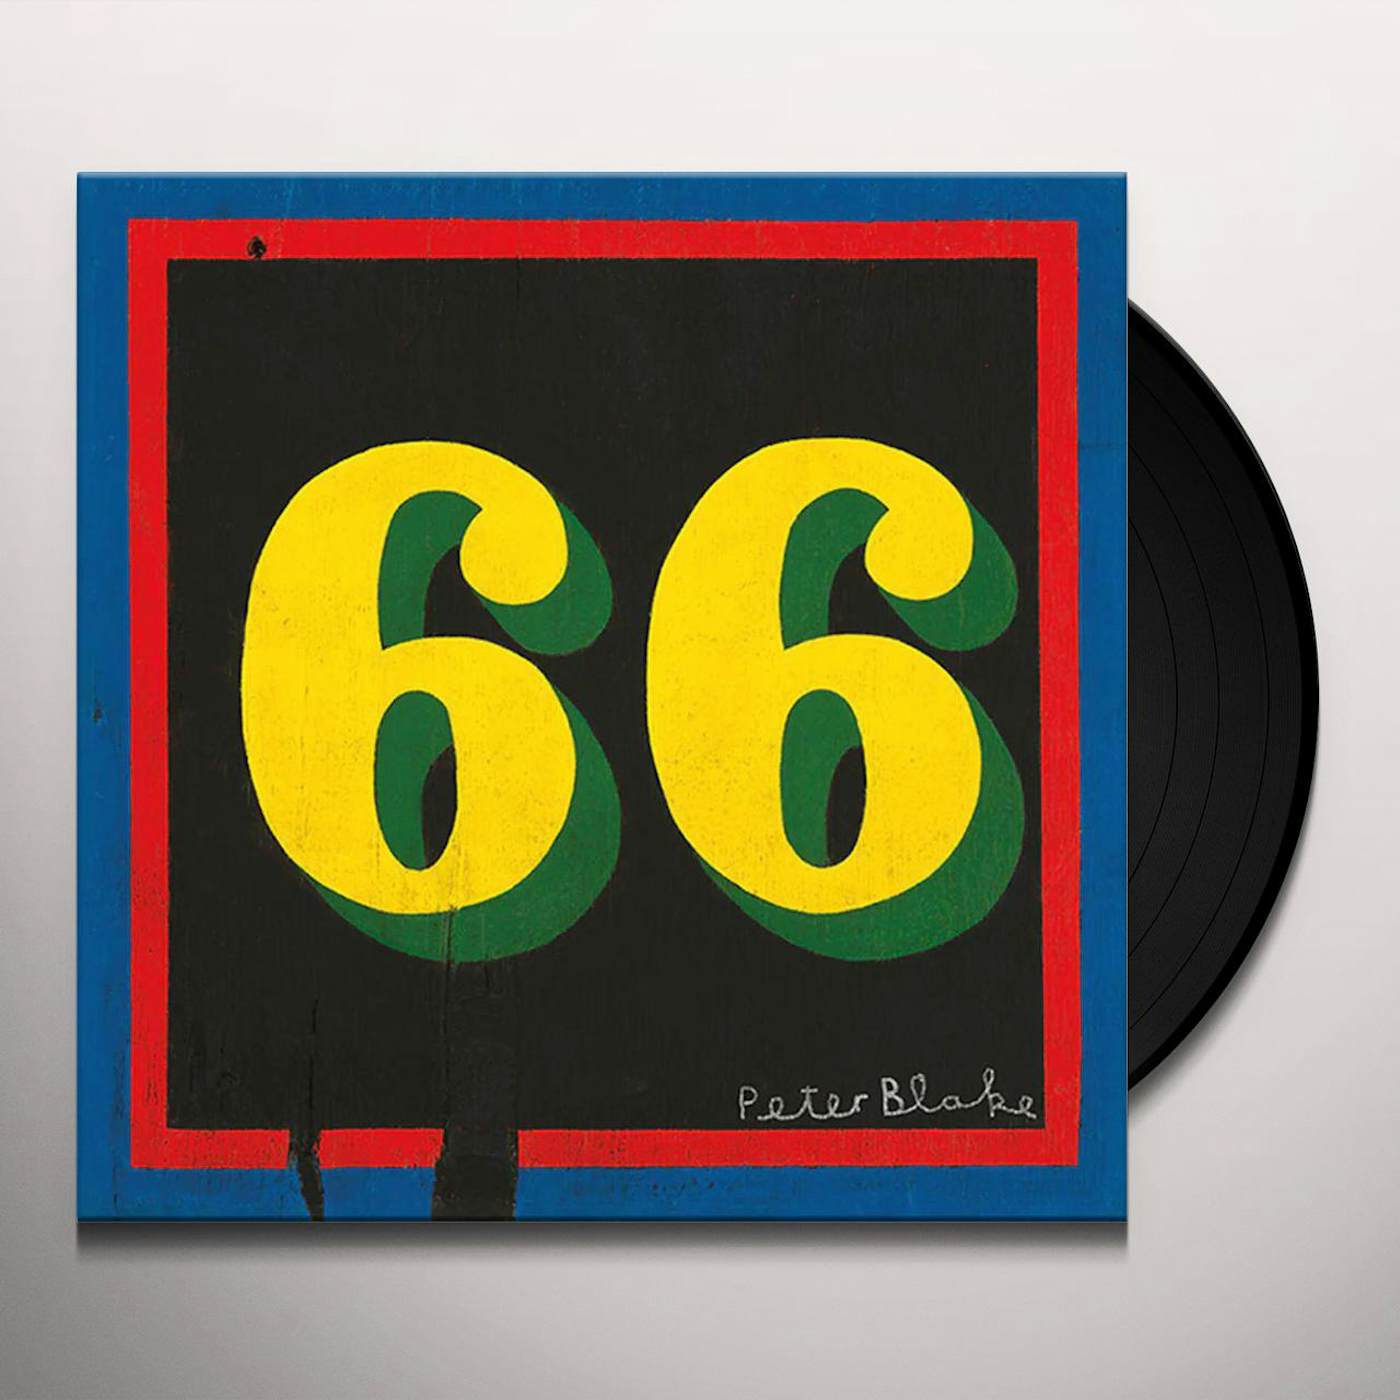 Paul Weller 66 Vinyl Record